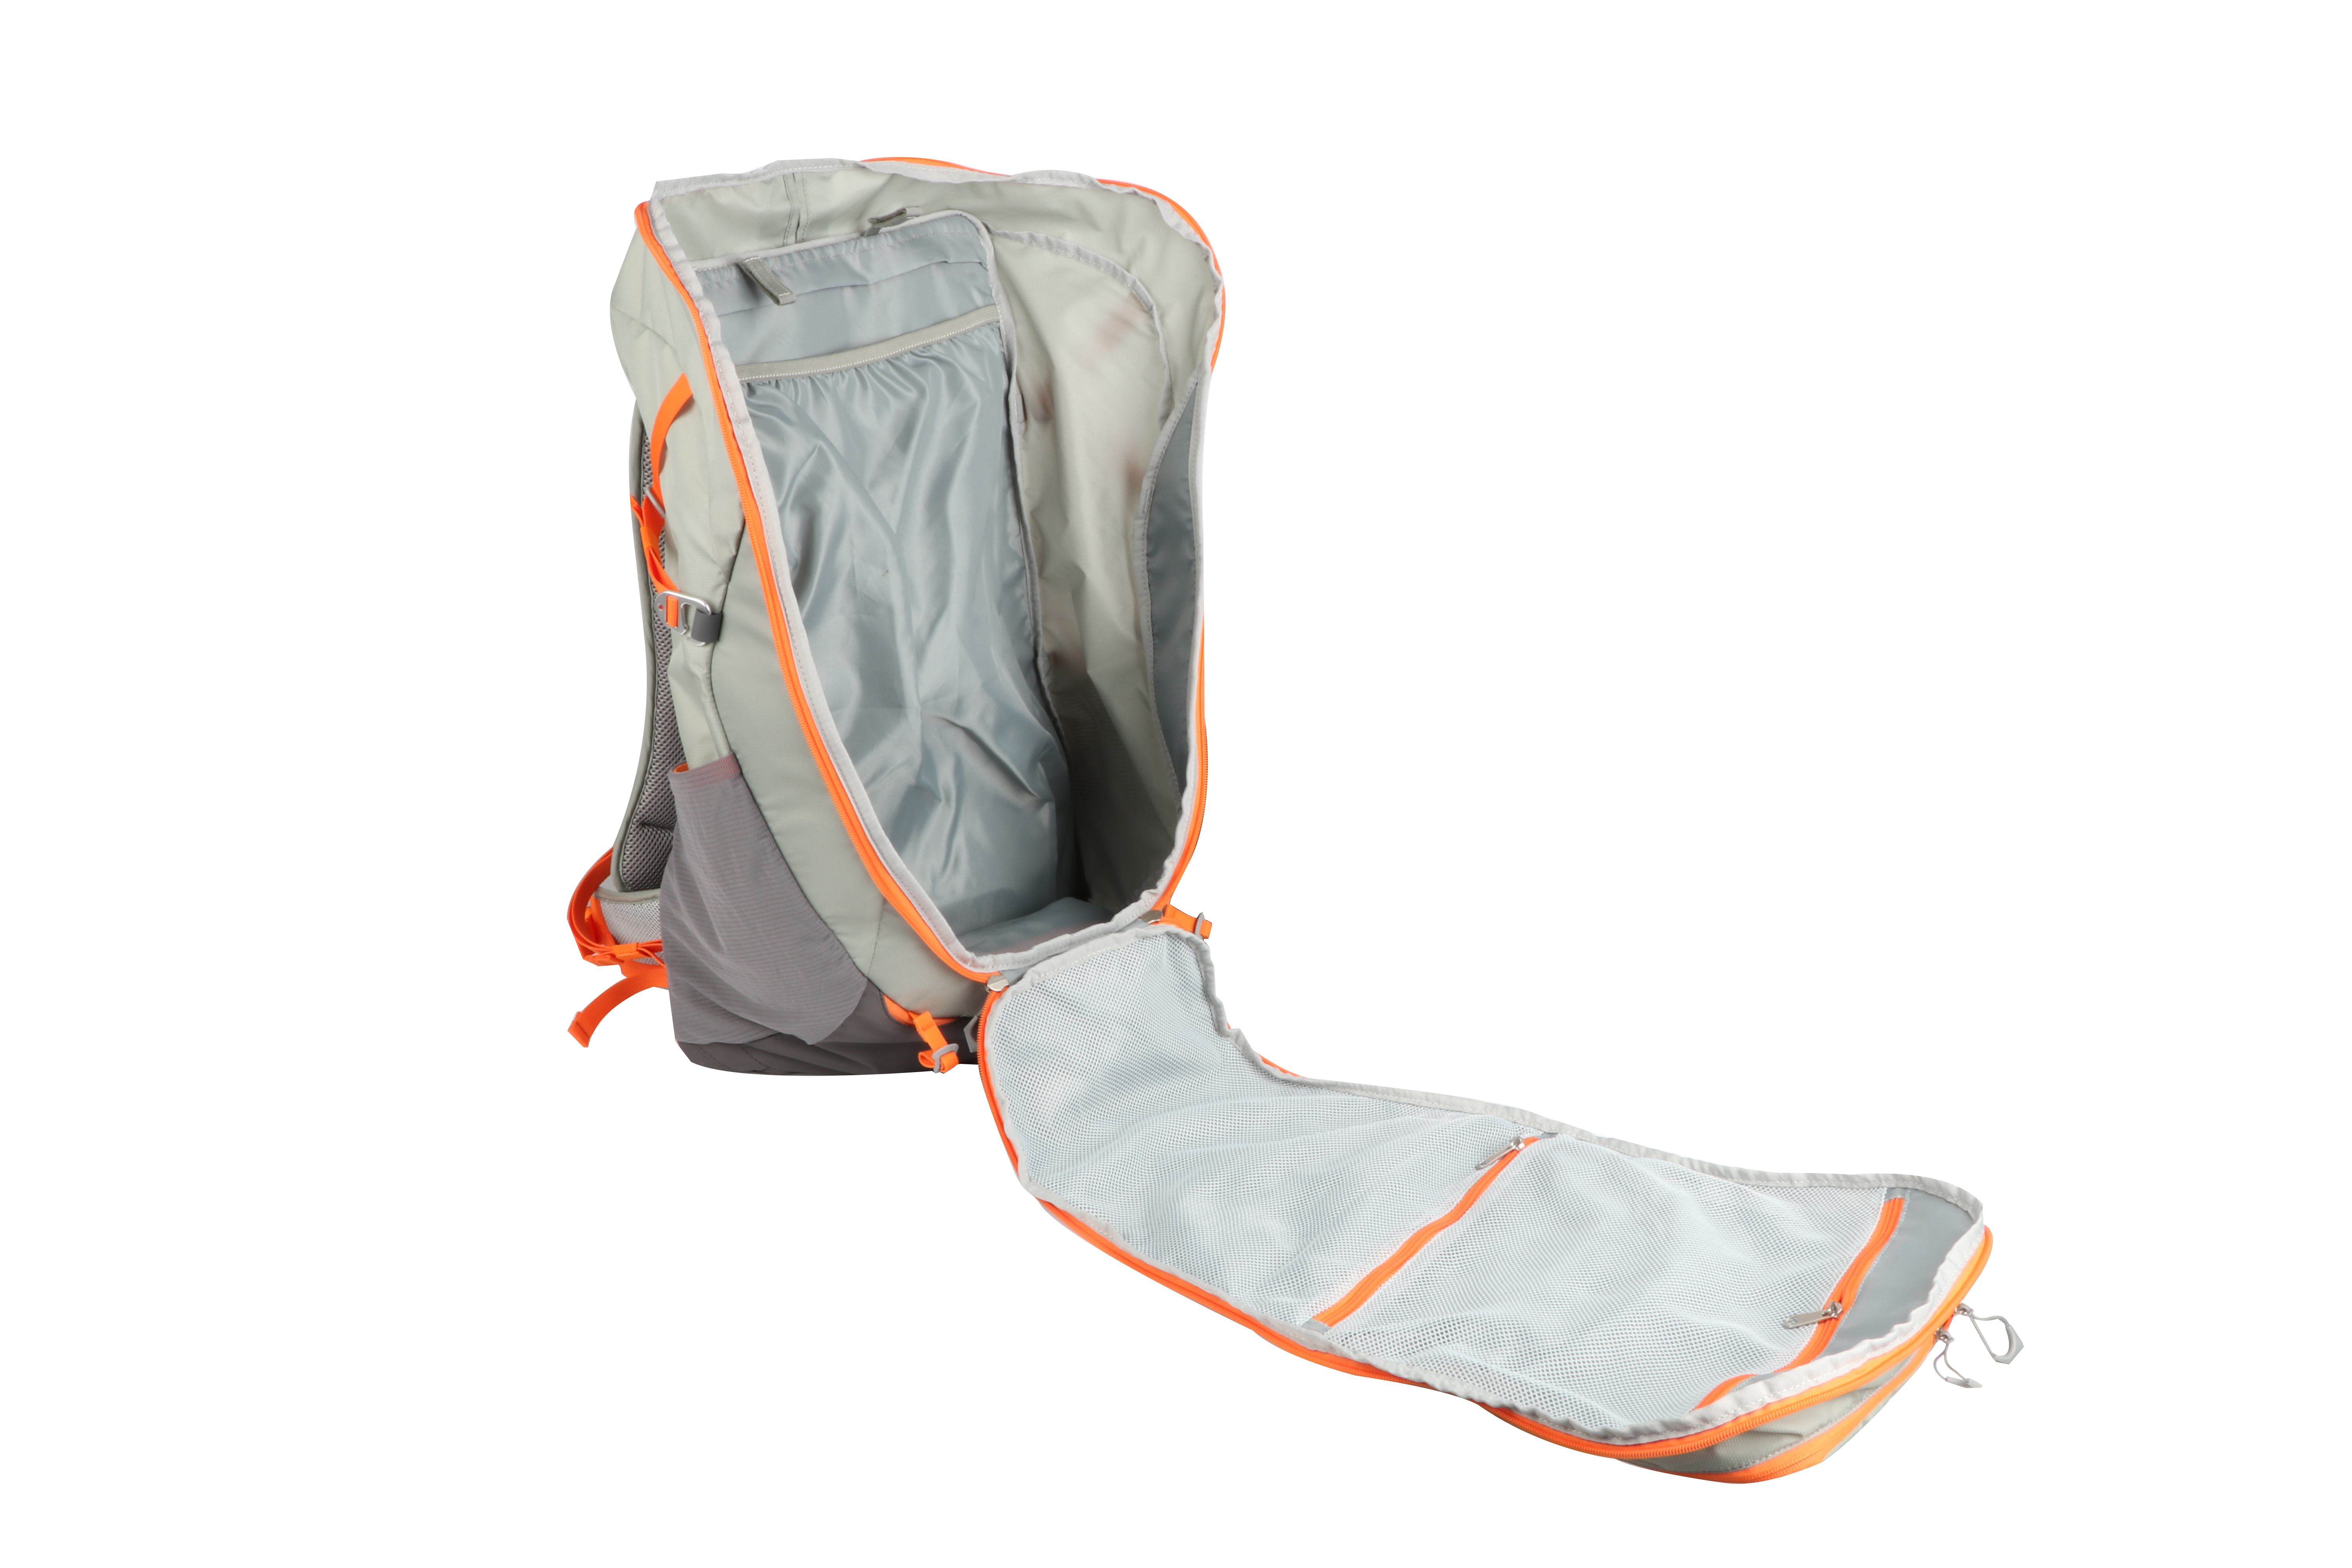 Ozark Trail 40L Lightweight Hiking Backpack, Gray, Unisex, Adult - image 2 of 8